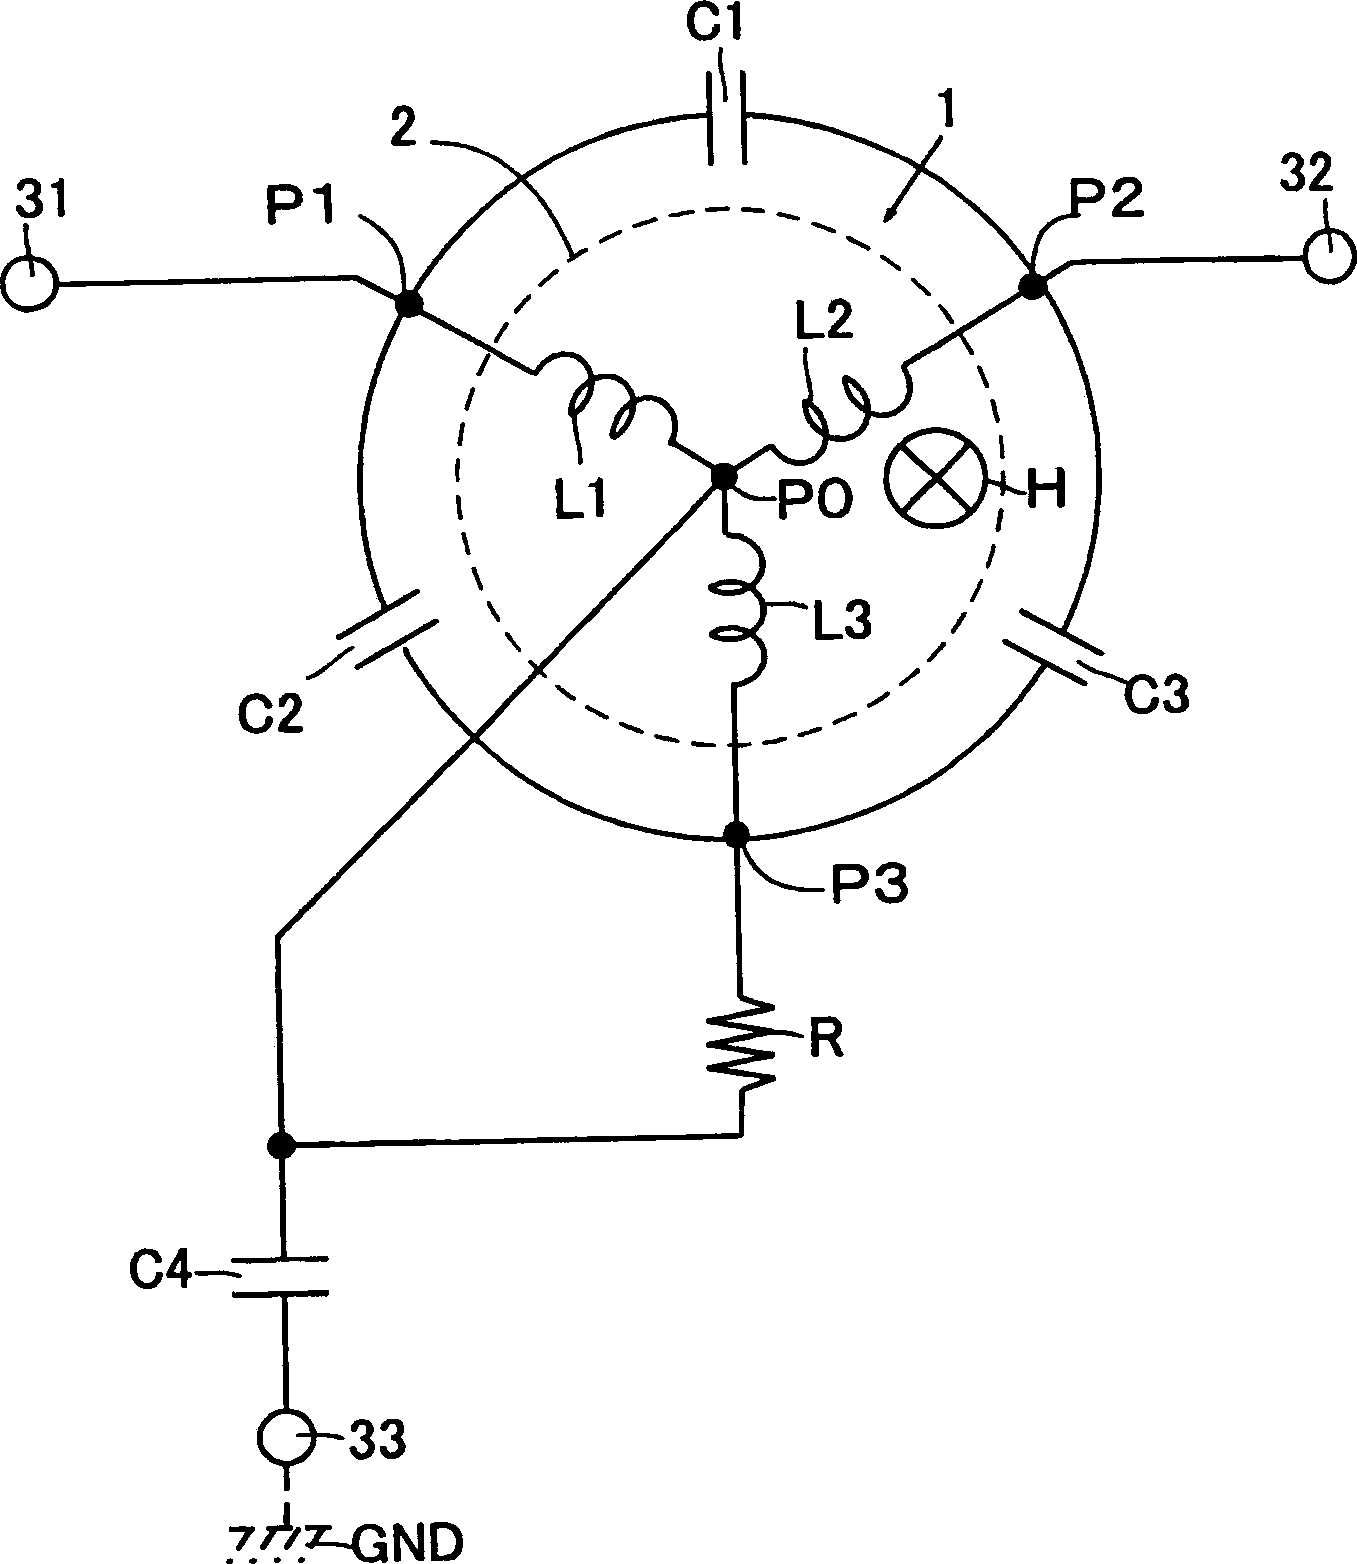 Nonreciprocal circuit element